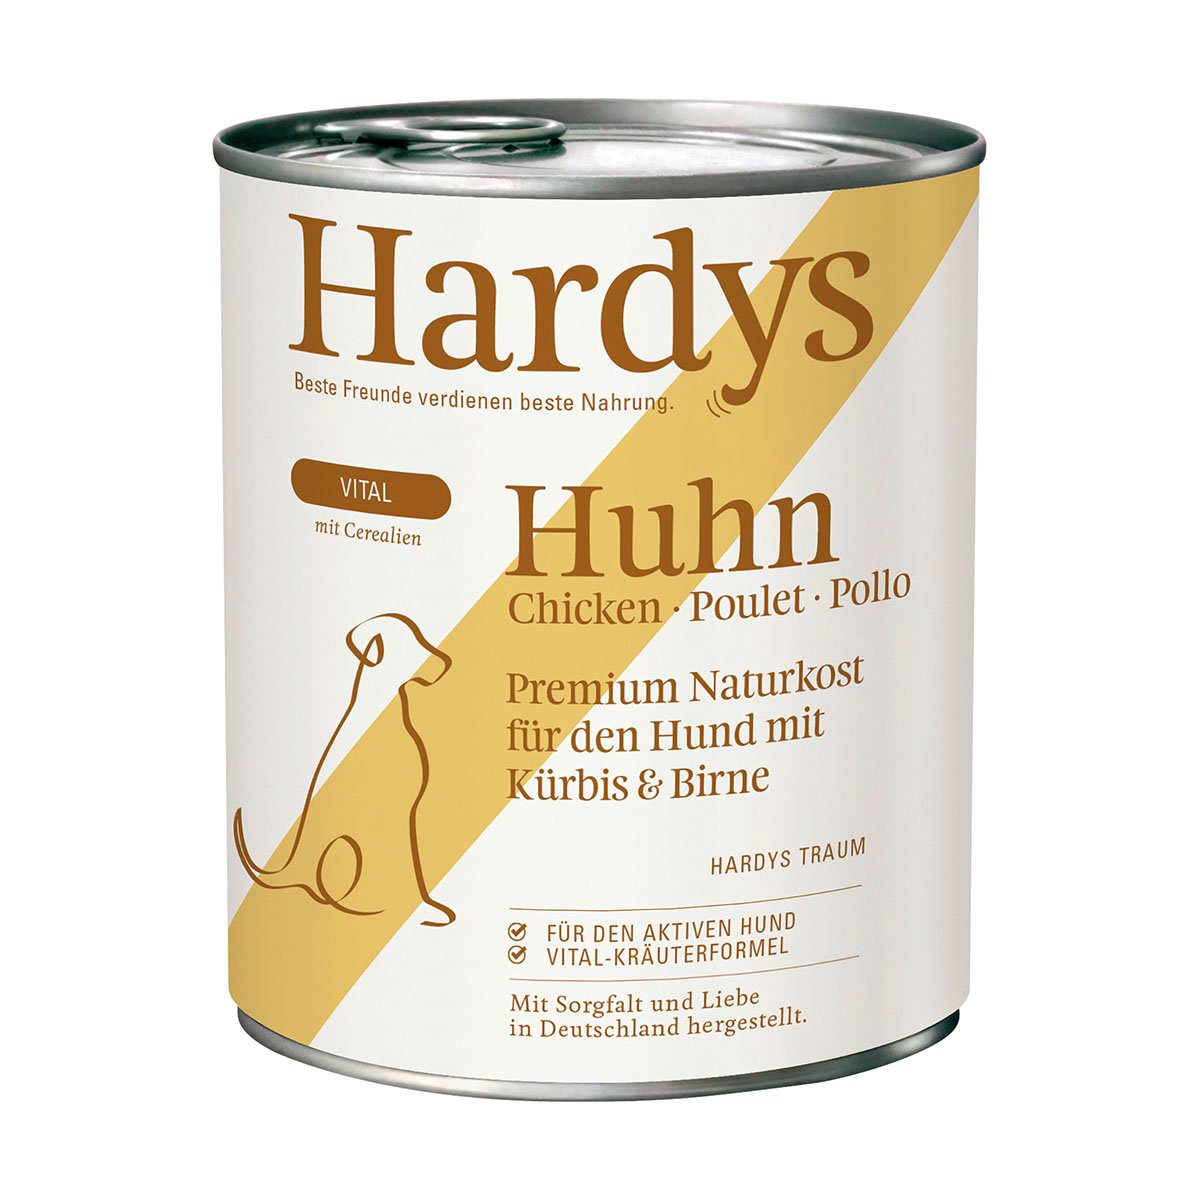 Hardys VITAL Huhn mit Kürbis & Birne 6x800g von Hardys